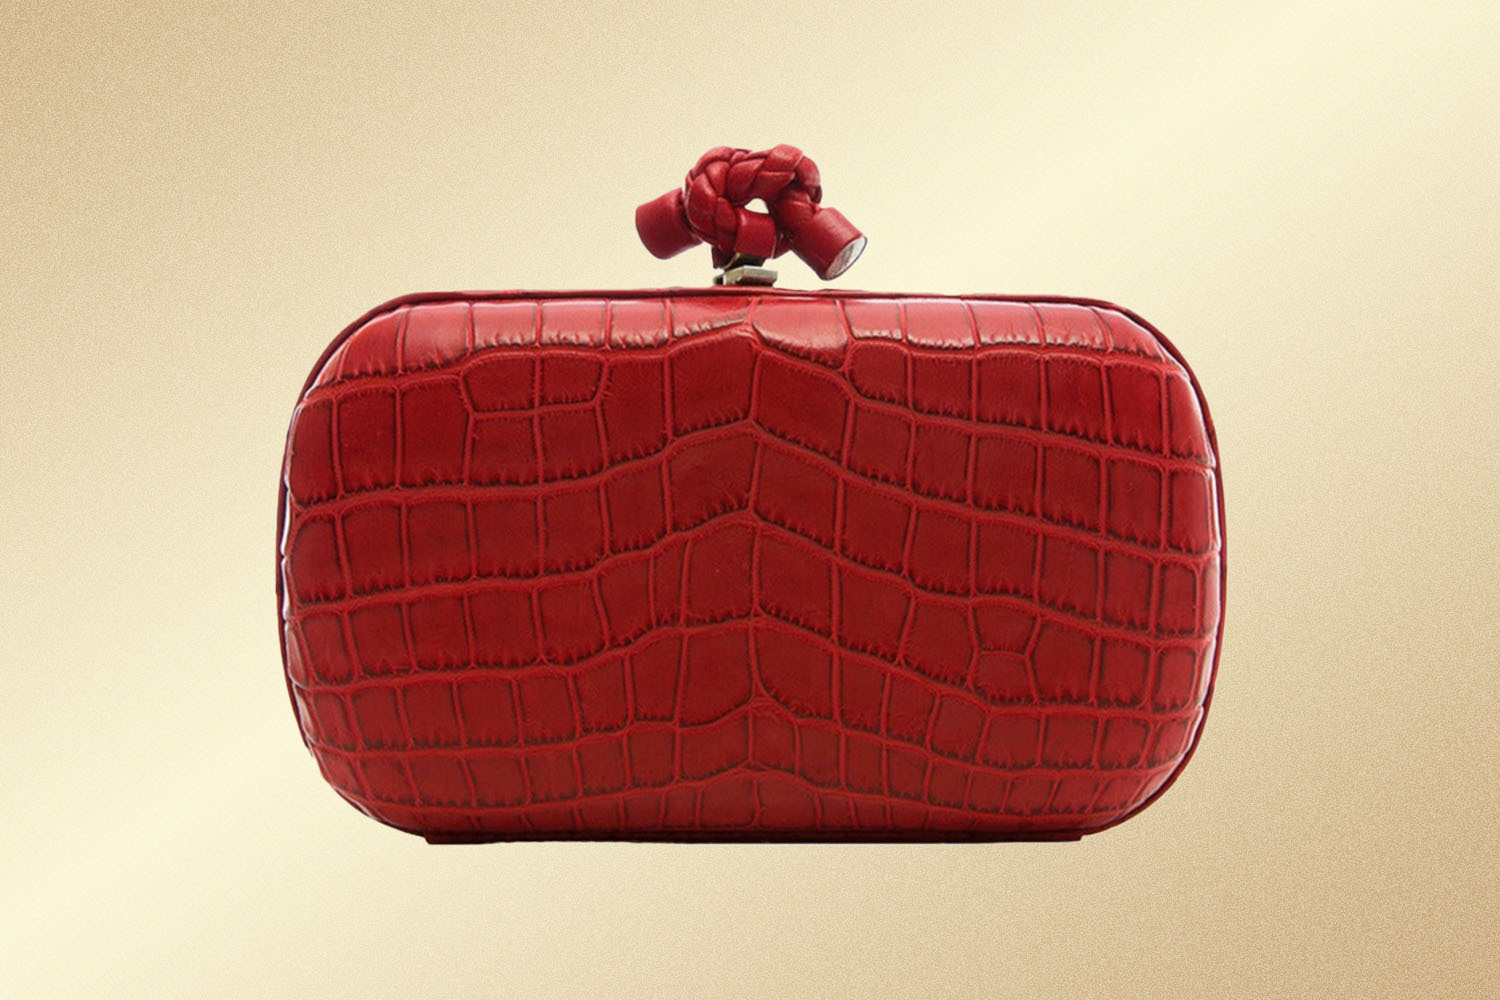 Women's Bottega Veneta Red Crocodile Knot Minaudiere Clutch Handbag available on eBay